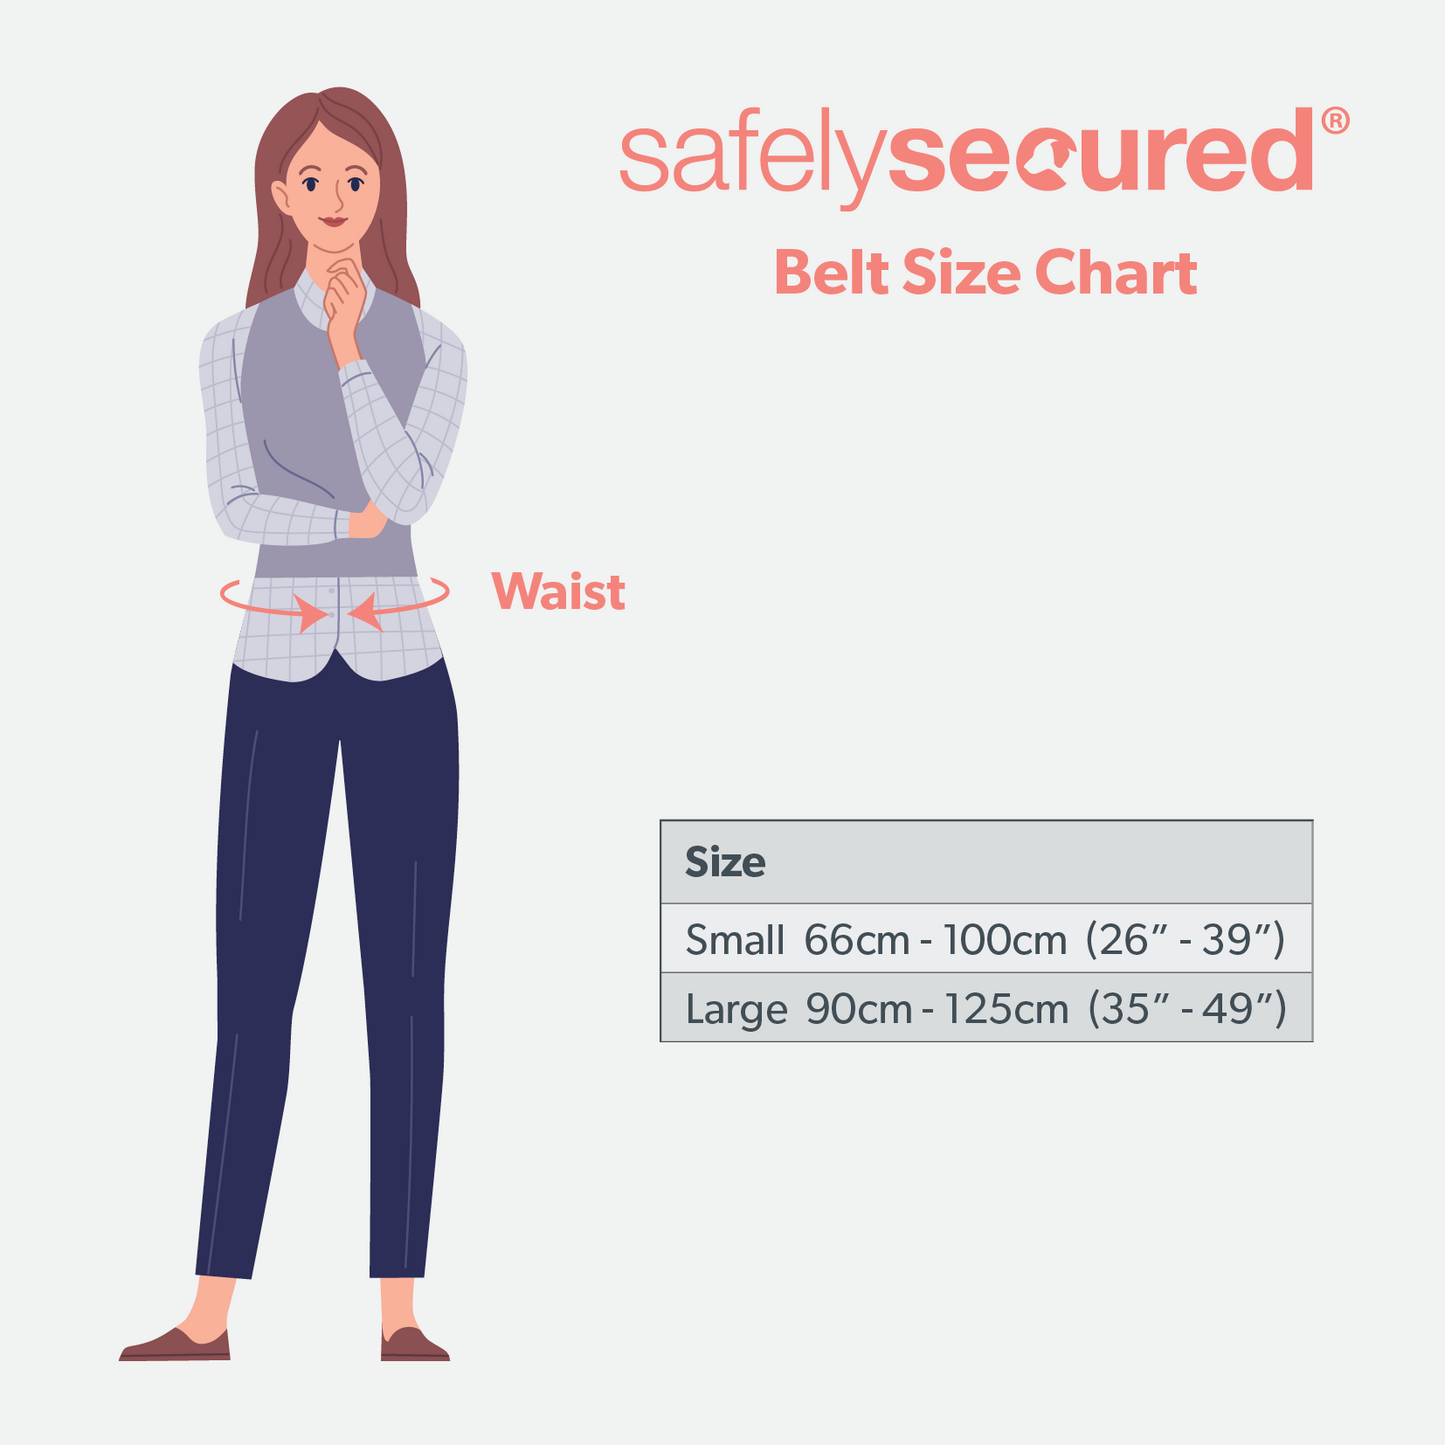 Safely Secured Anti-theft belt measurement chart